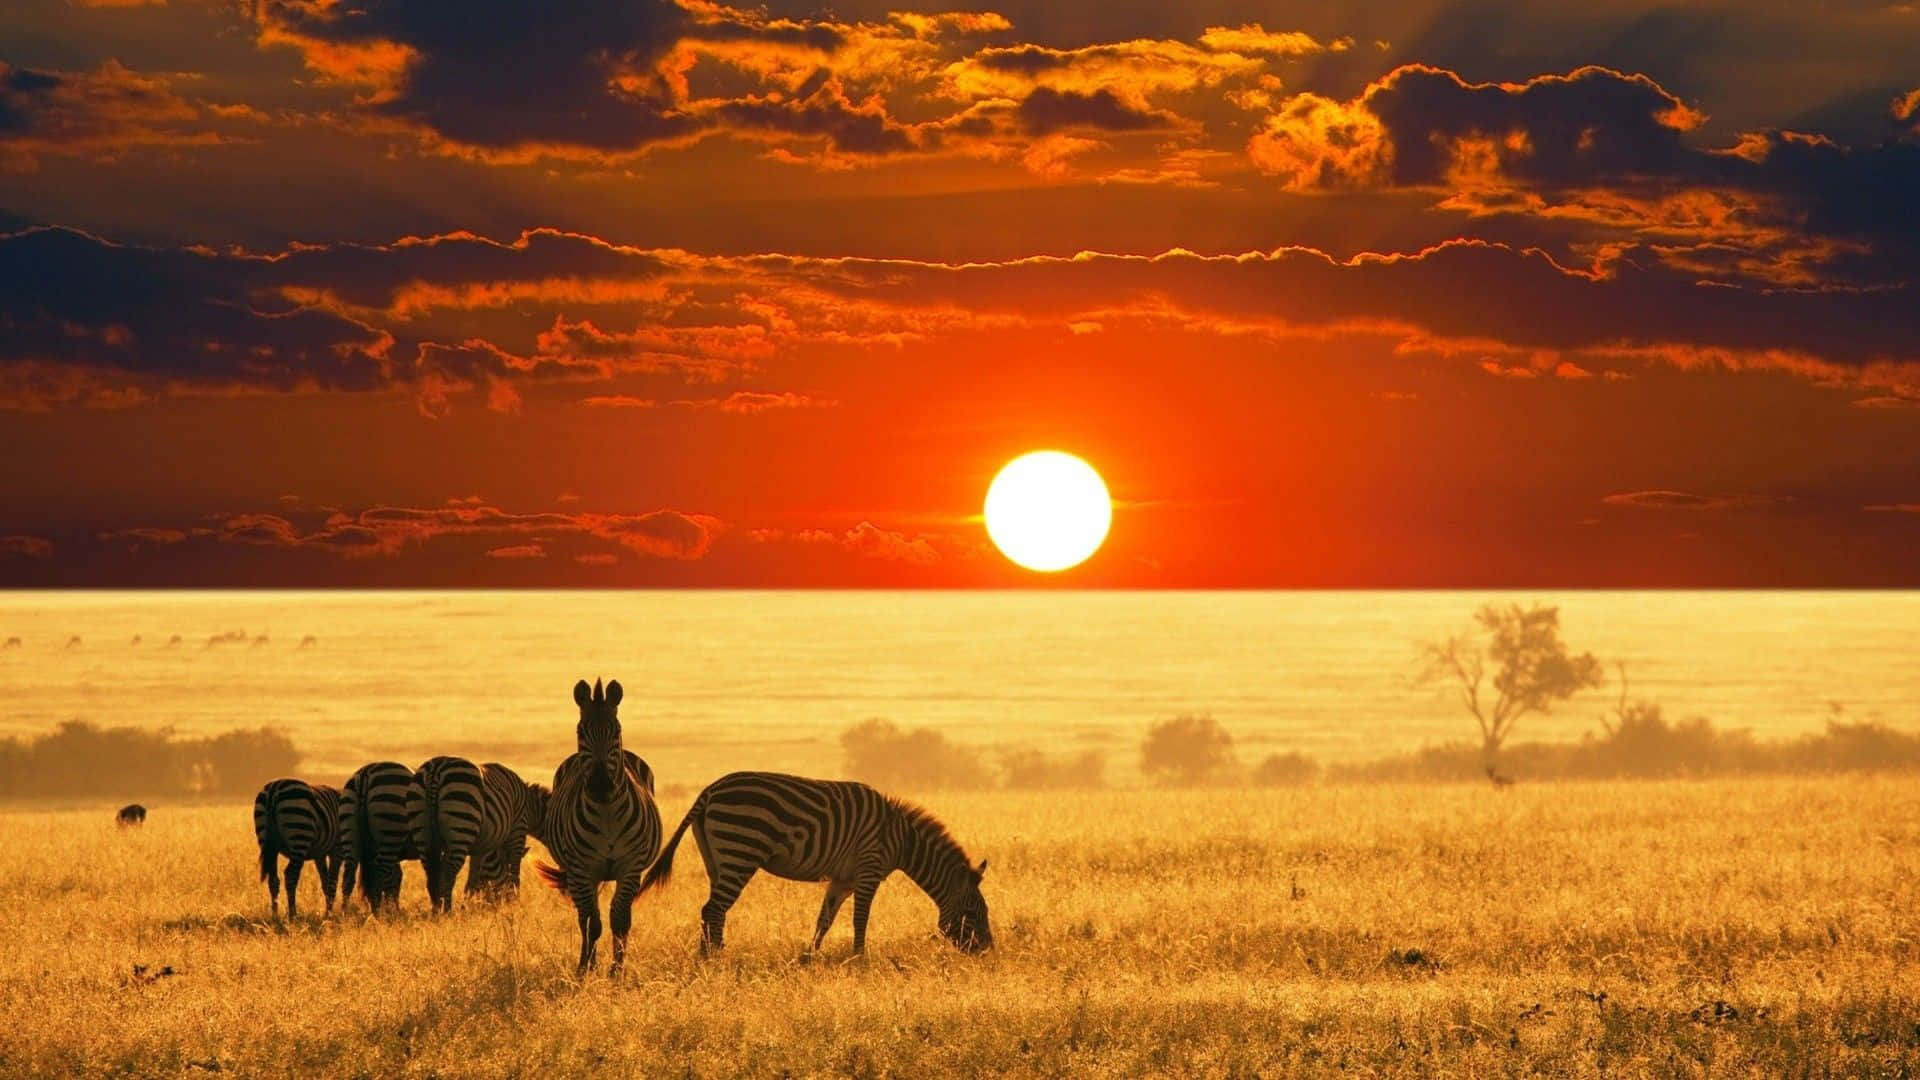 Safari Zebra Sunset African Wildlife Picture